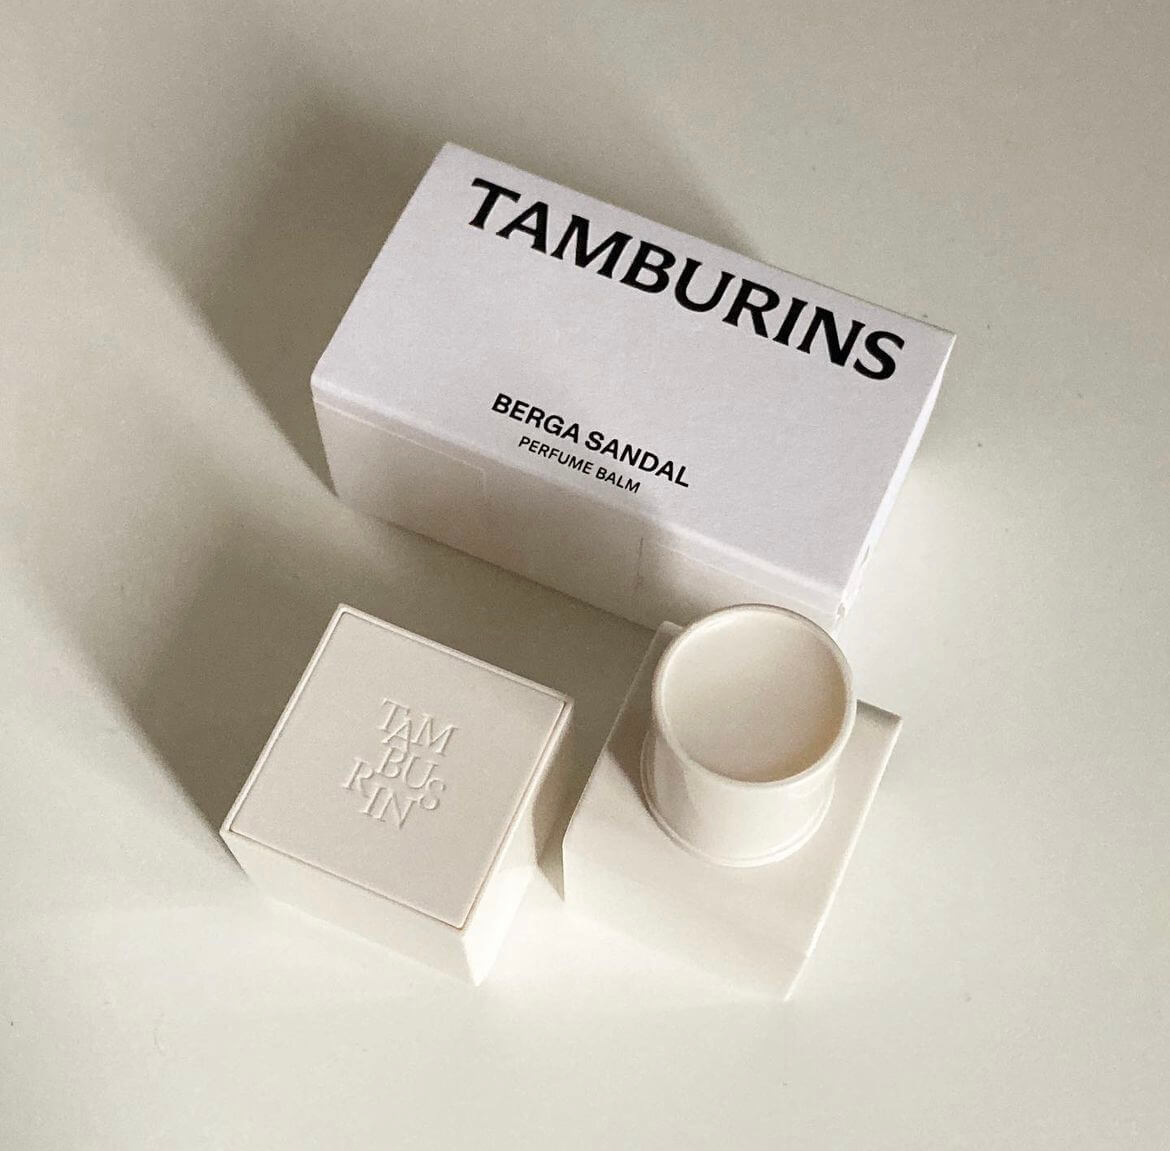 [Tamburins] Perfume Balm